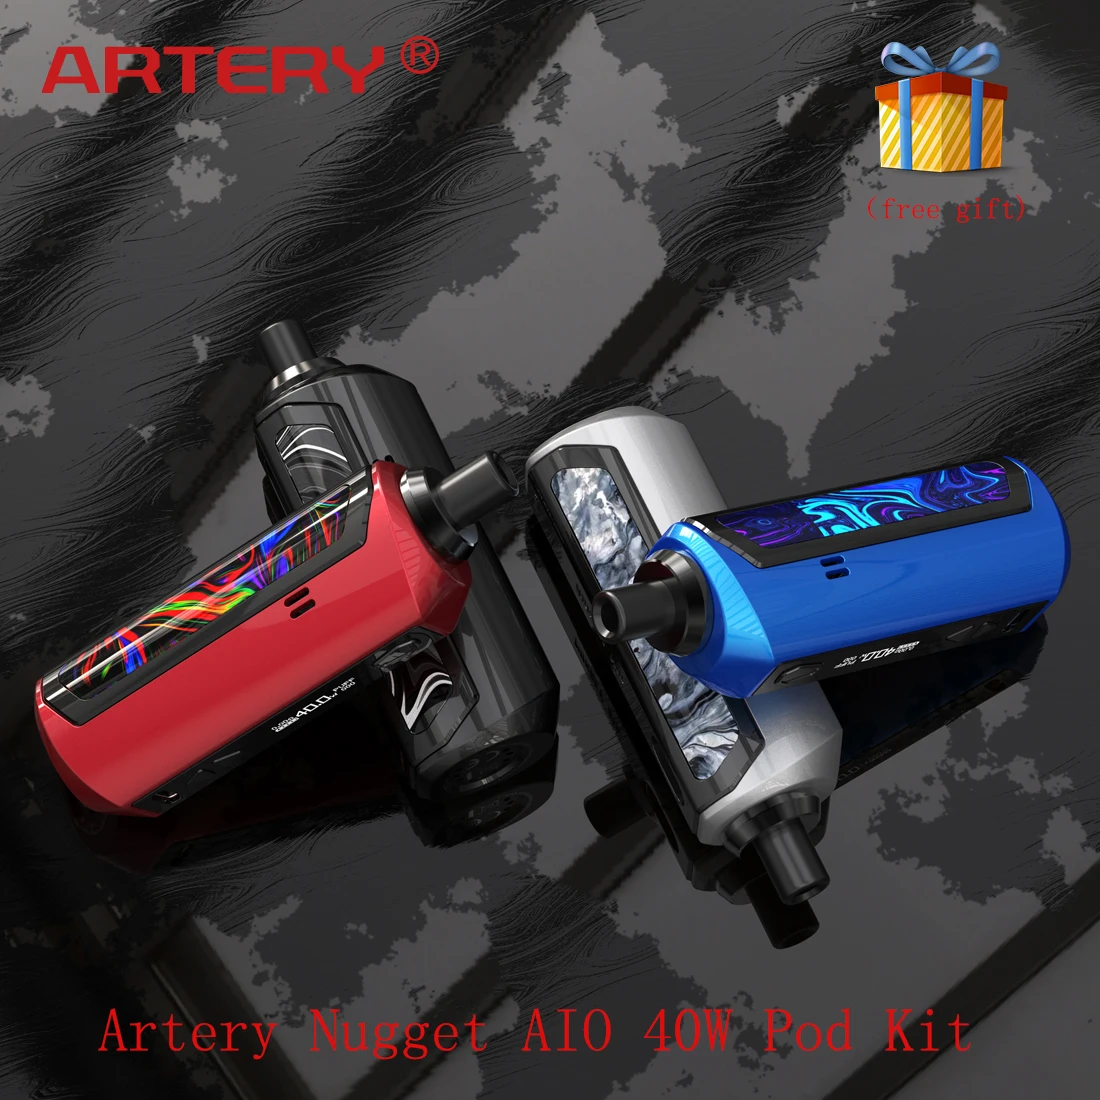 

Hot Artery Nugget AIO 40W Pod Kit 1500mAh built-in battery with Max 40W output E-cig Box Mod Pod Kit vs Vinci X/ pal 2 pro